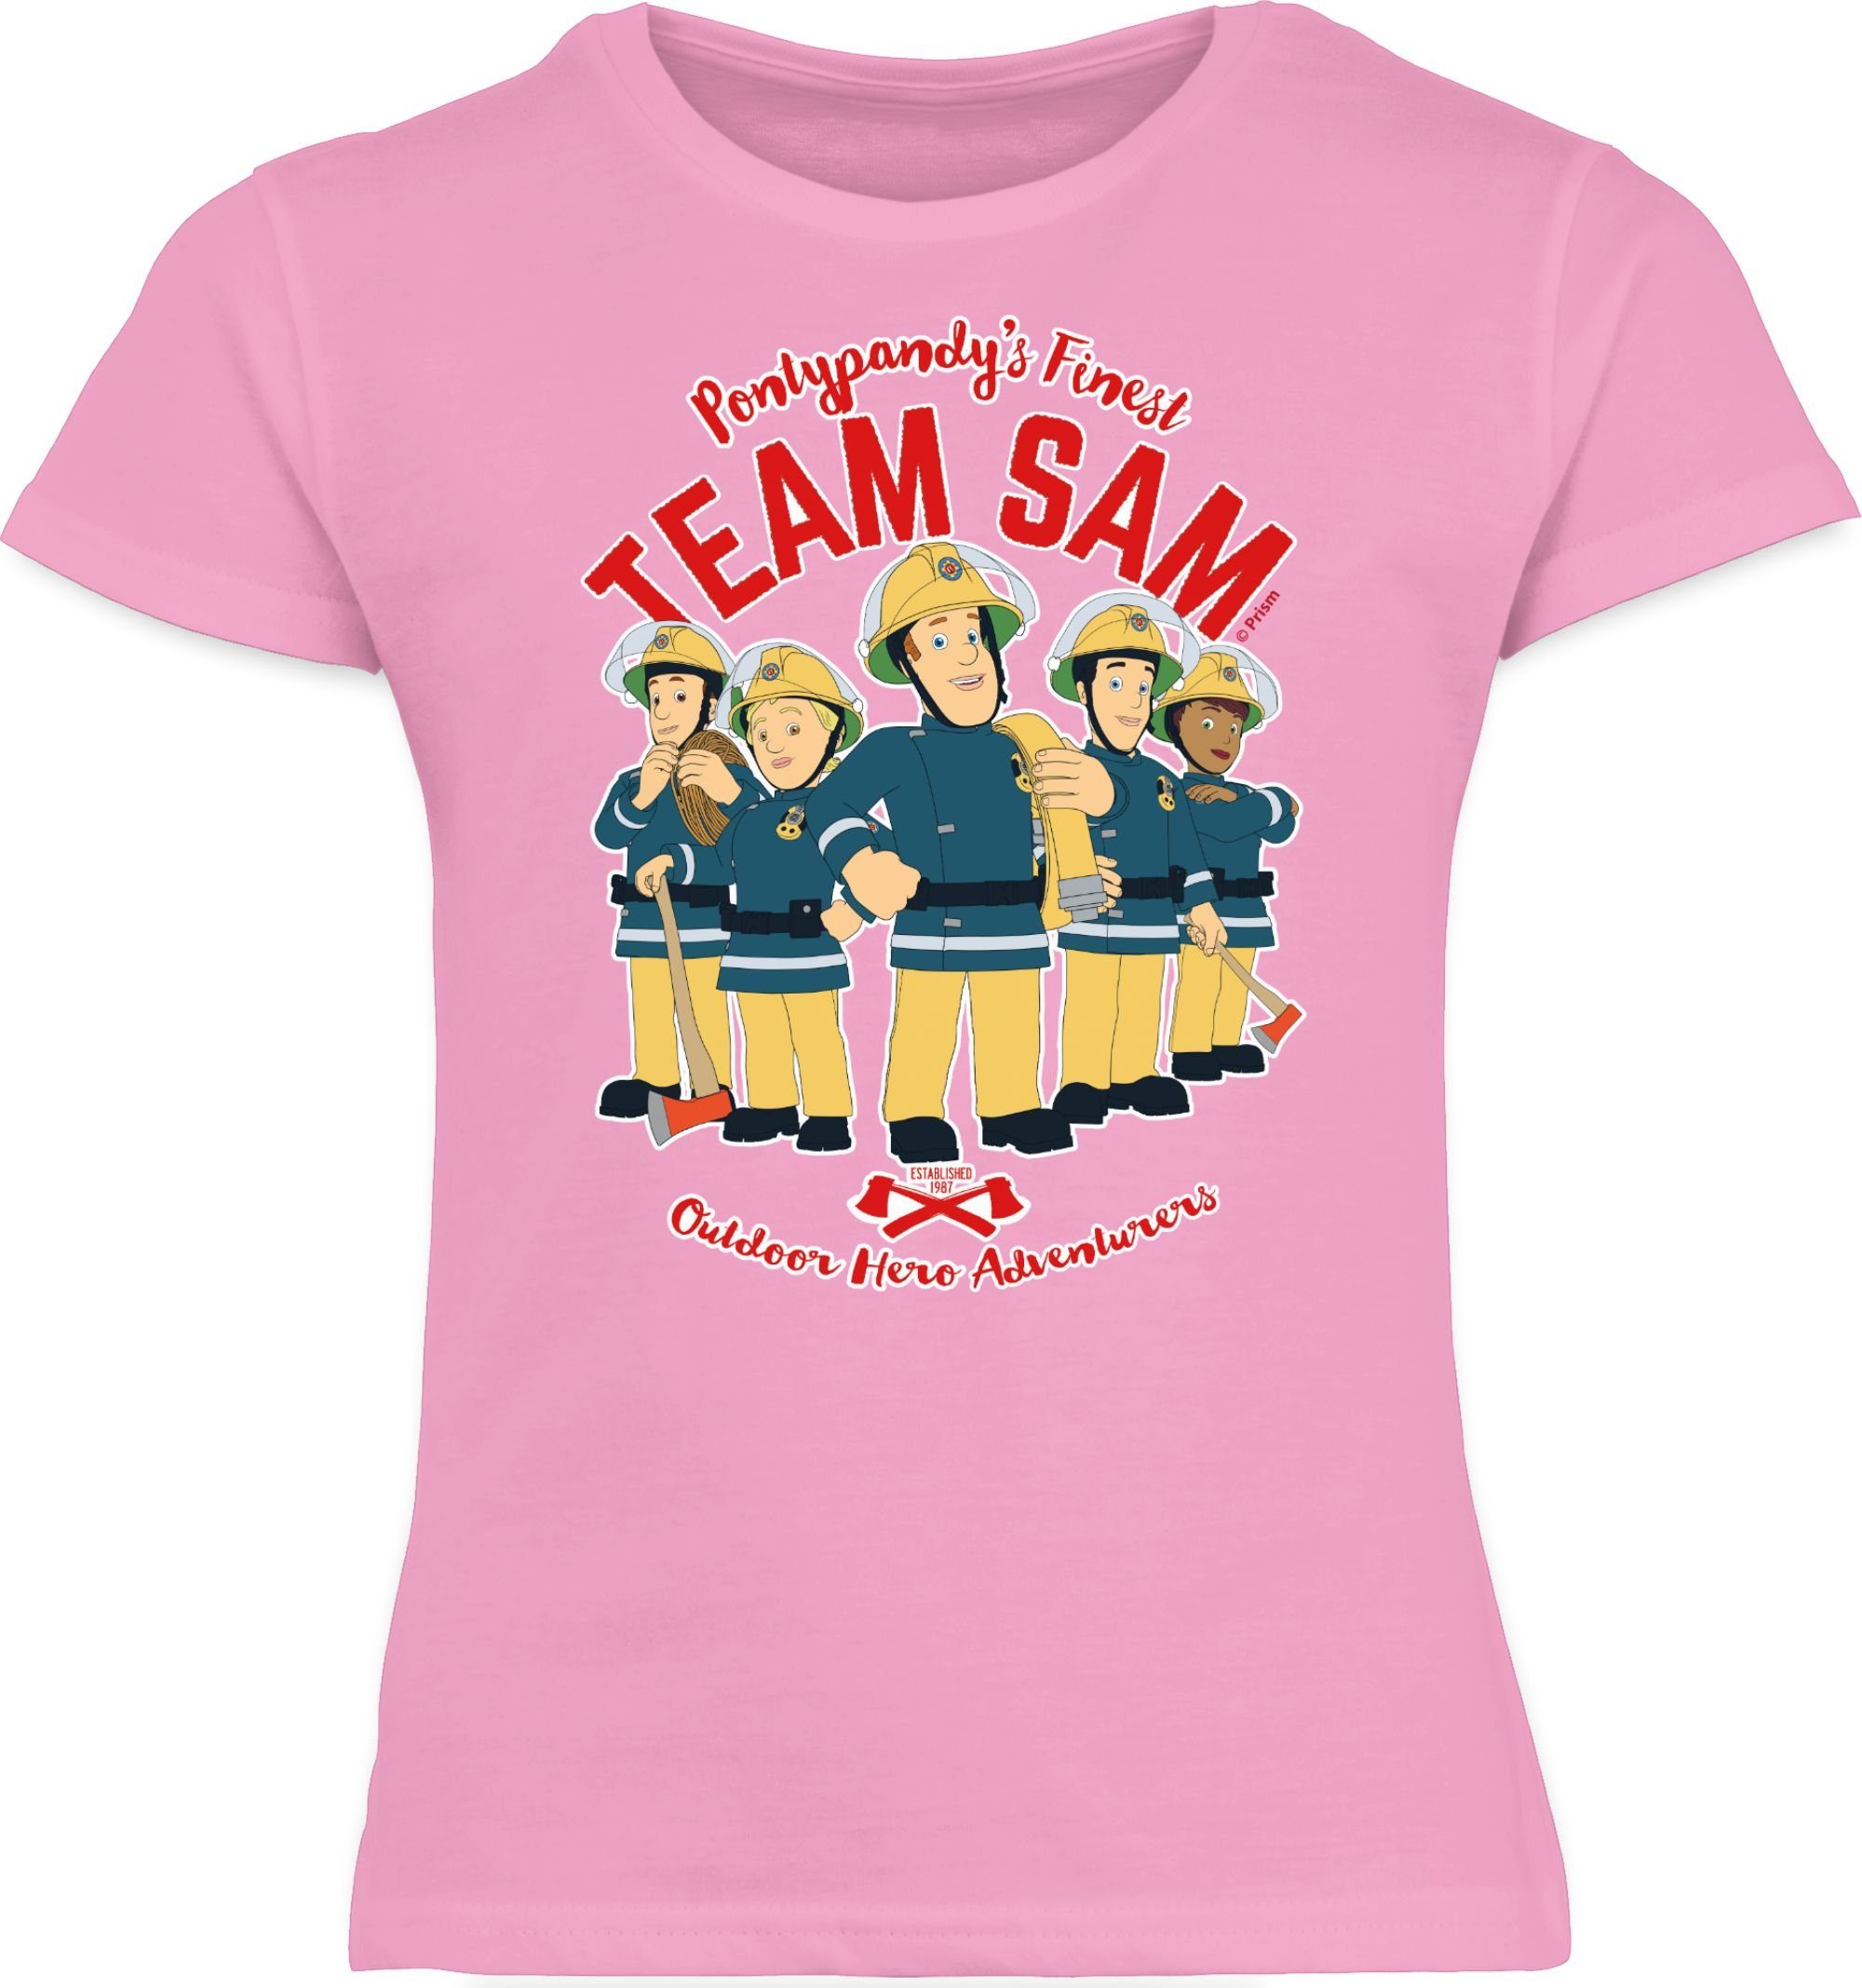 Shirtracer T-Shirt Team Sam Feuerwehrmann Rosa Mädchen 1 Sam